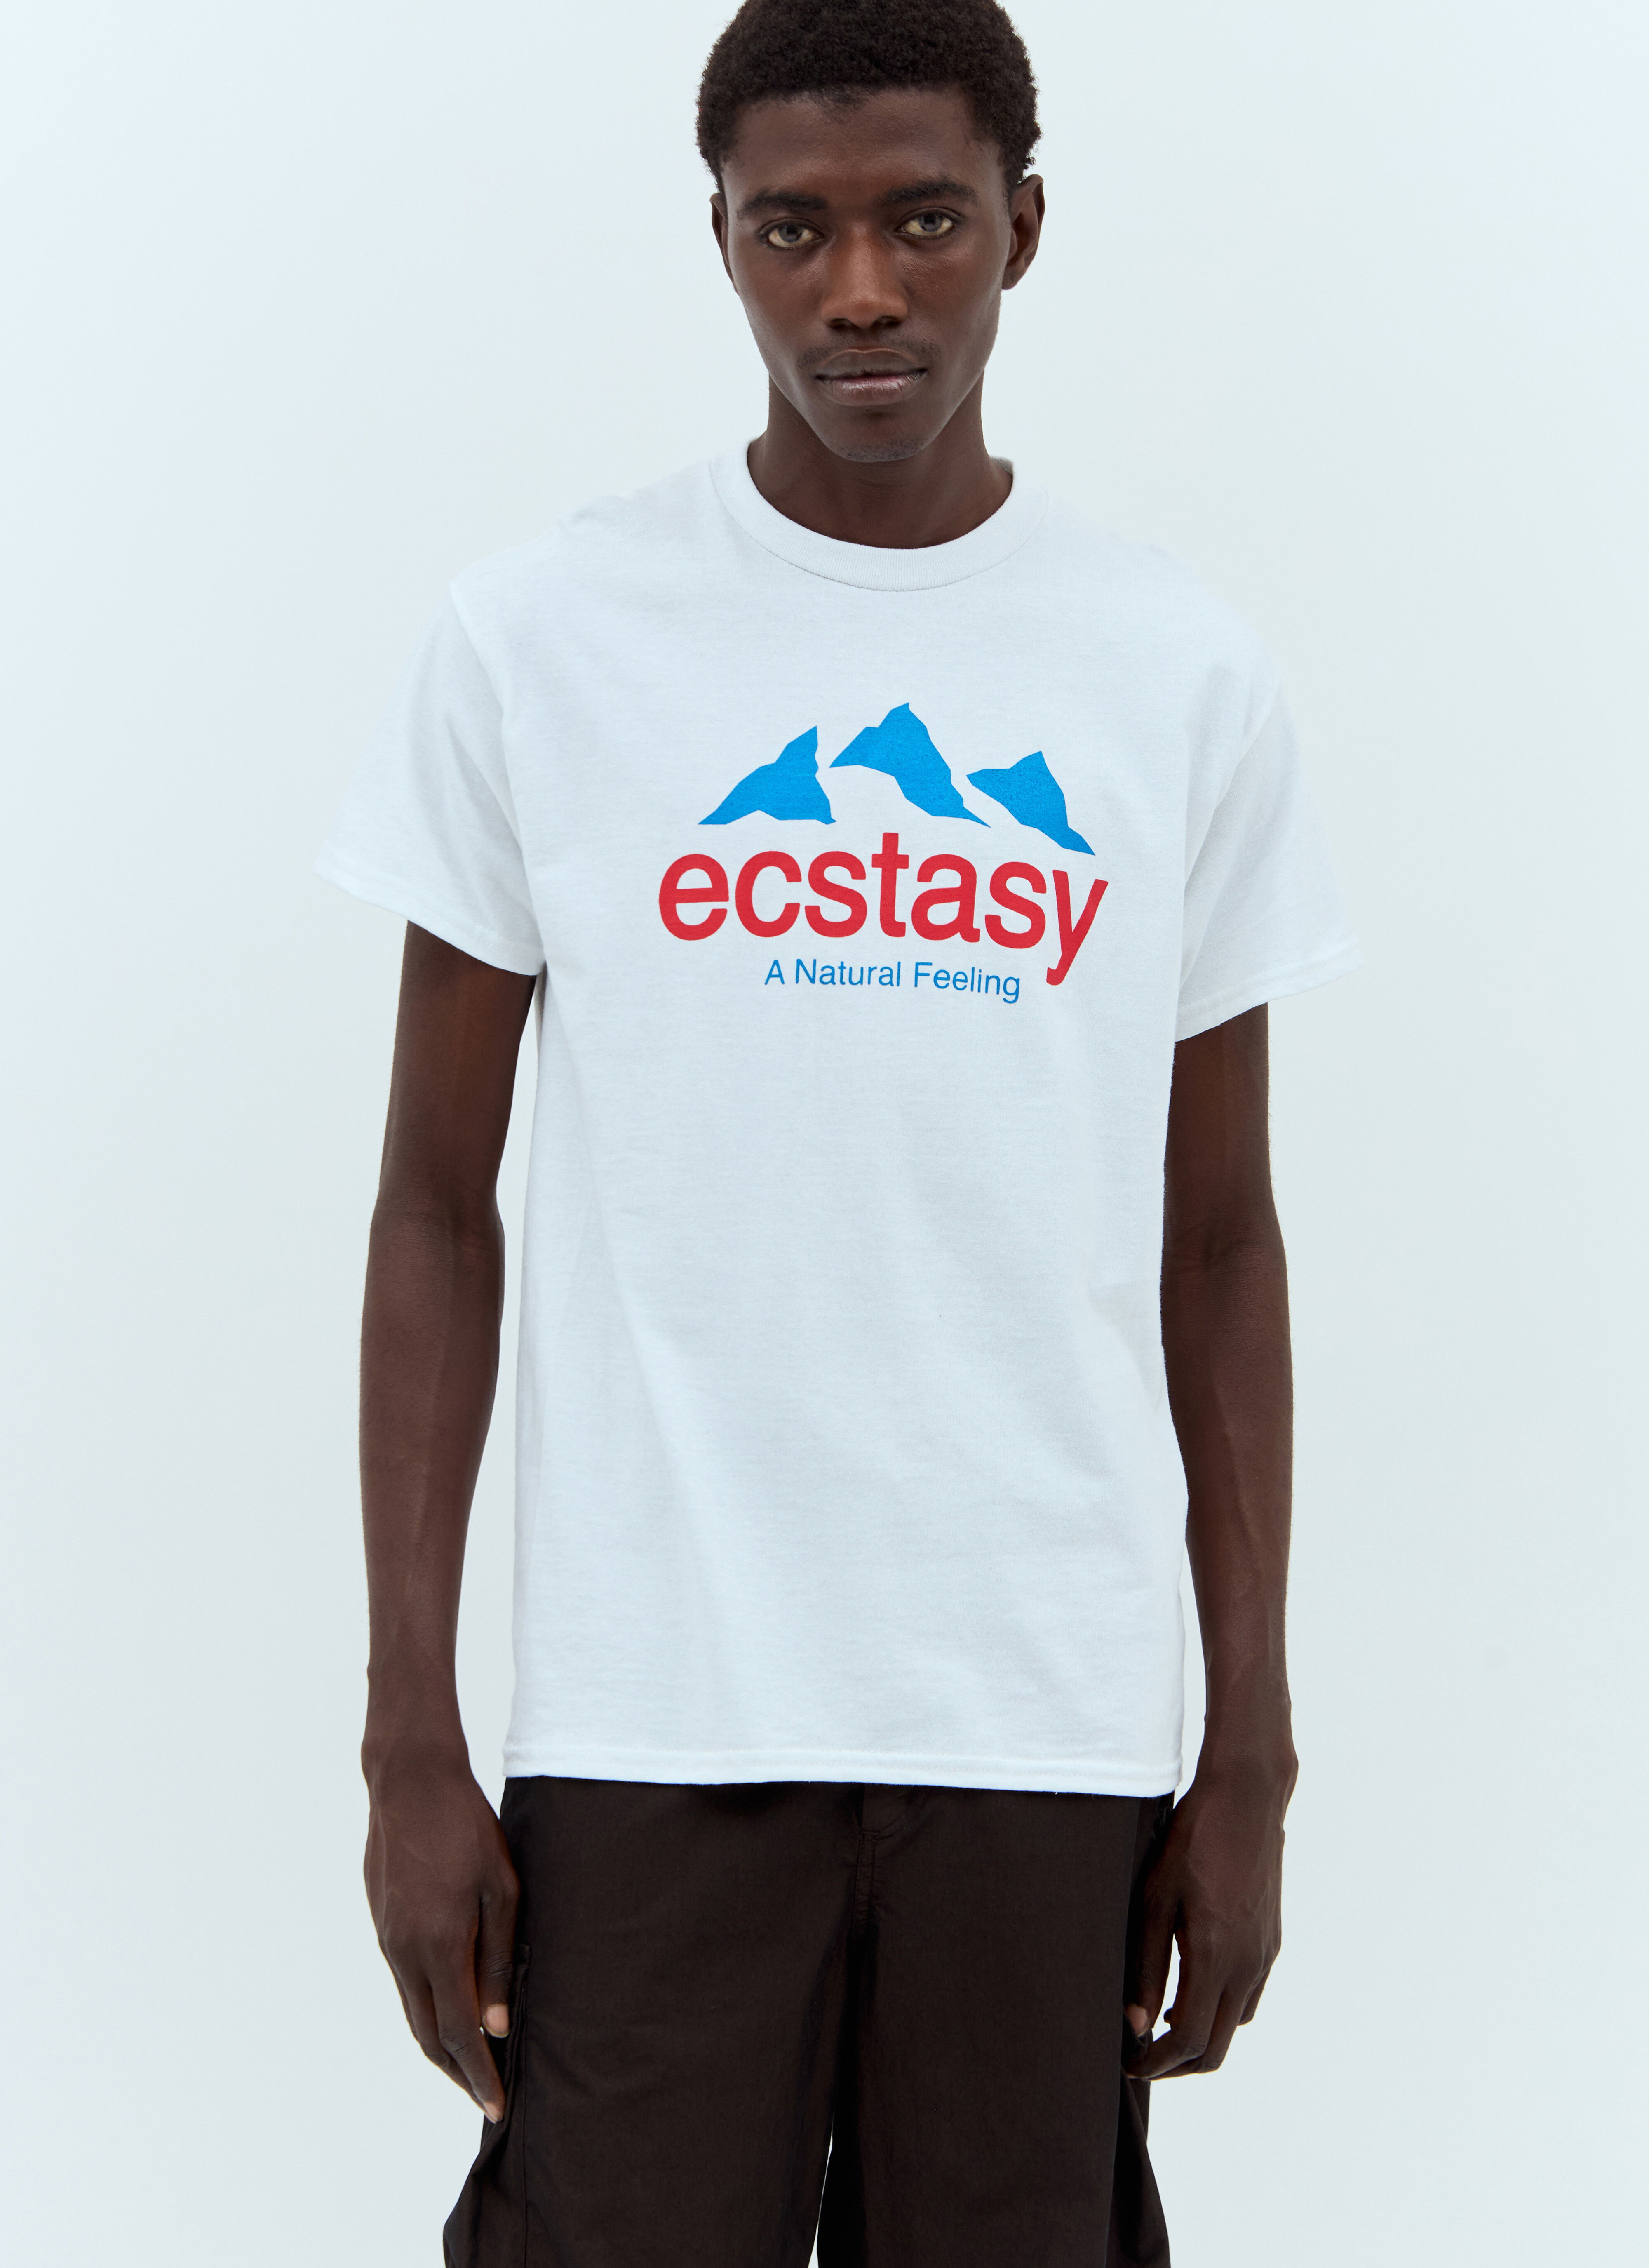 CONNIE COSTAS Ecstasy T-Shirt Blue coc0158004